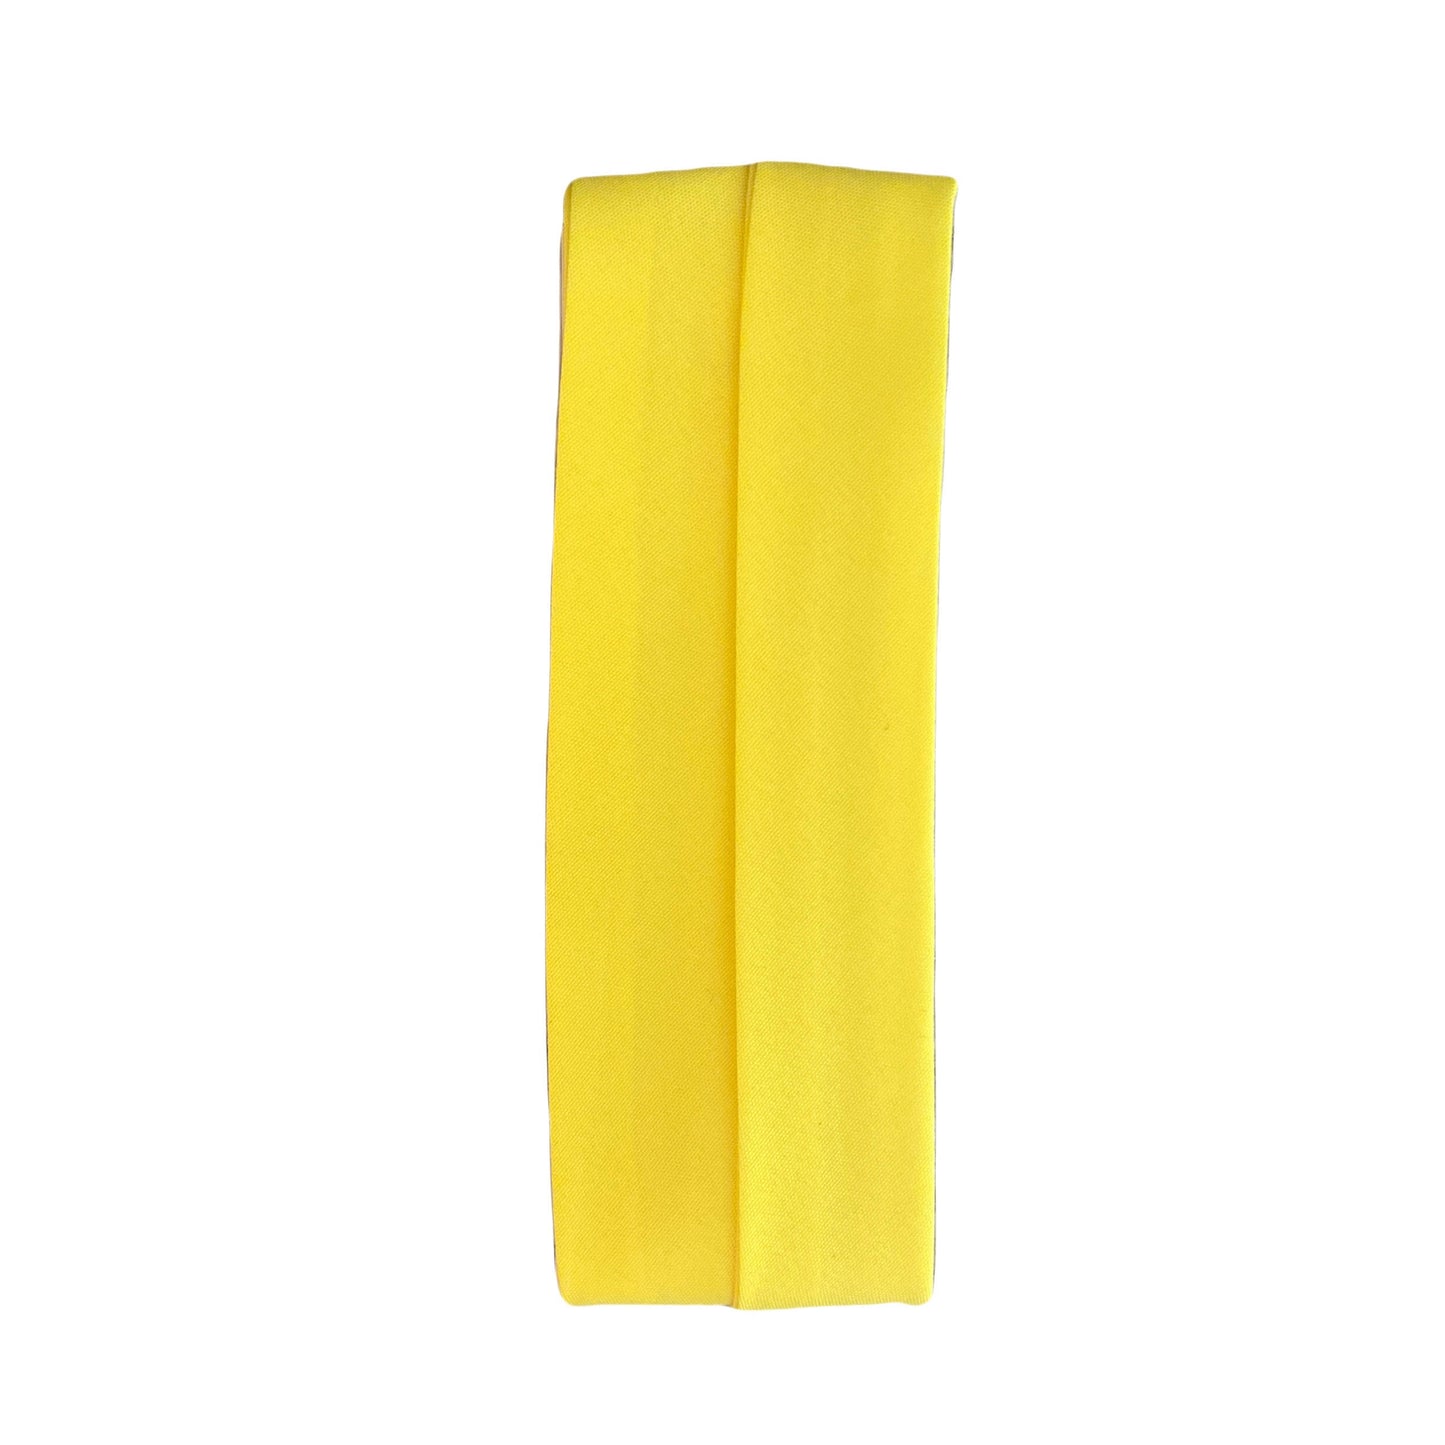 Yellow- 1 inch